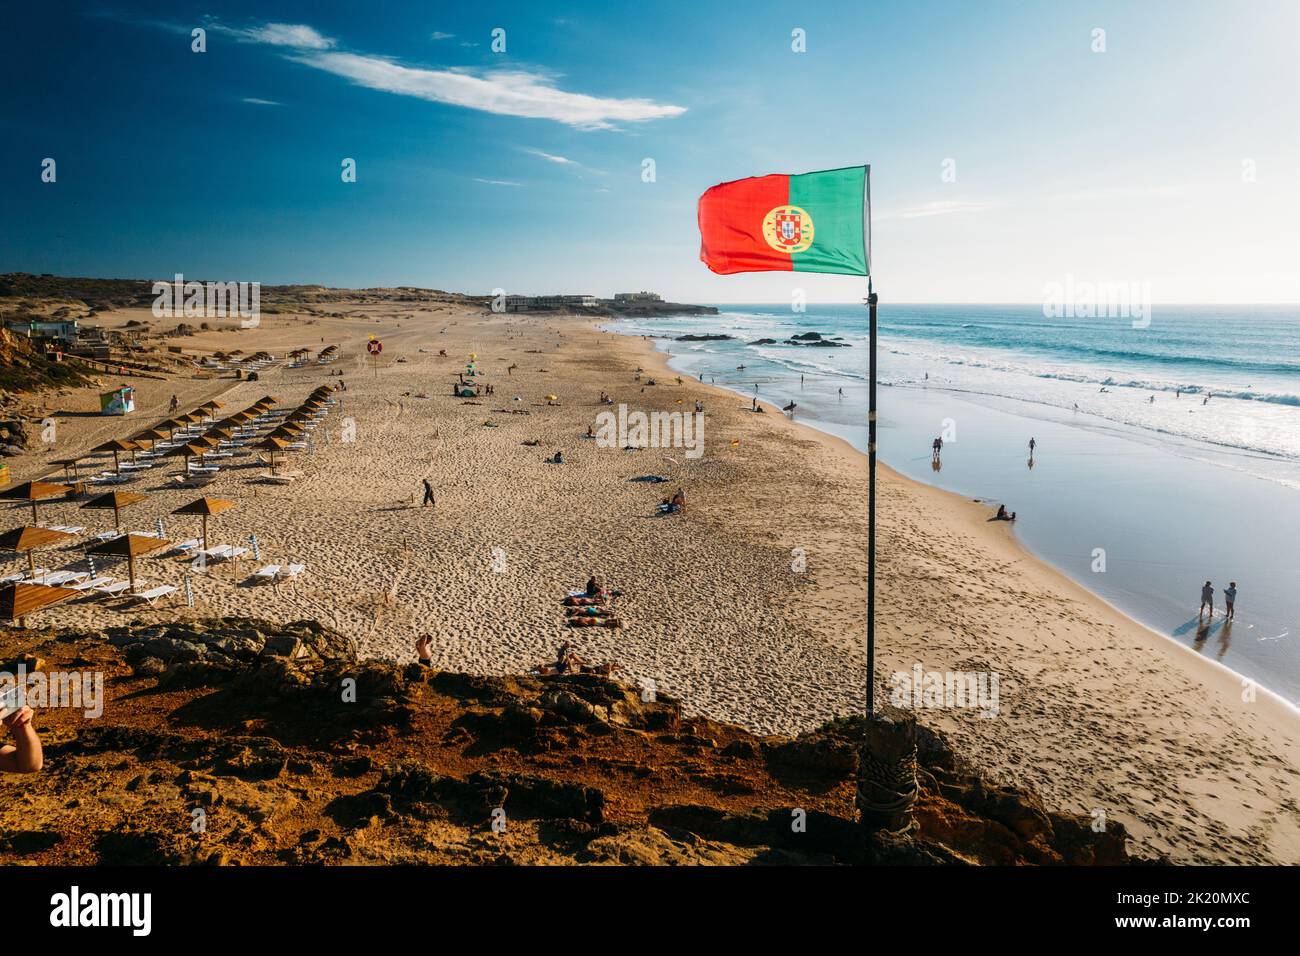 Portuguese flag waving over blue sky and ocean, Guincho Beach, Portugal Stock Photo